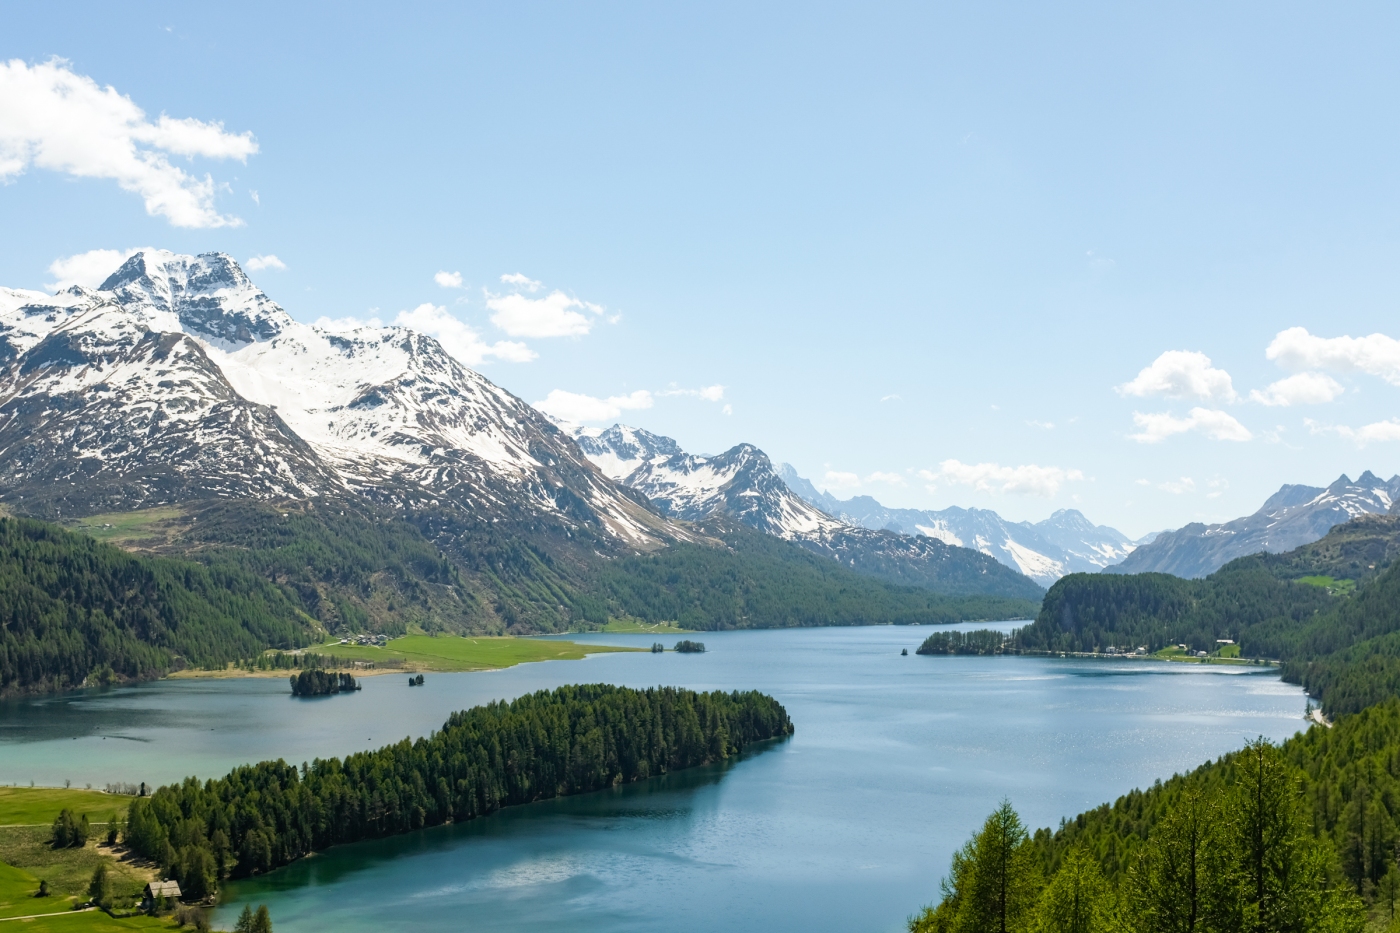 A forested peninsula juts into an alpine lake